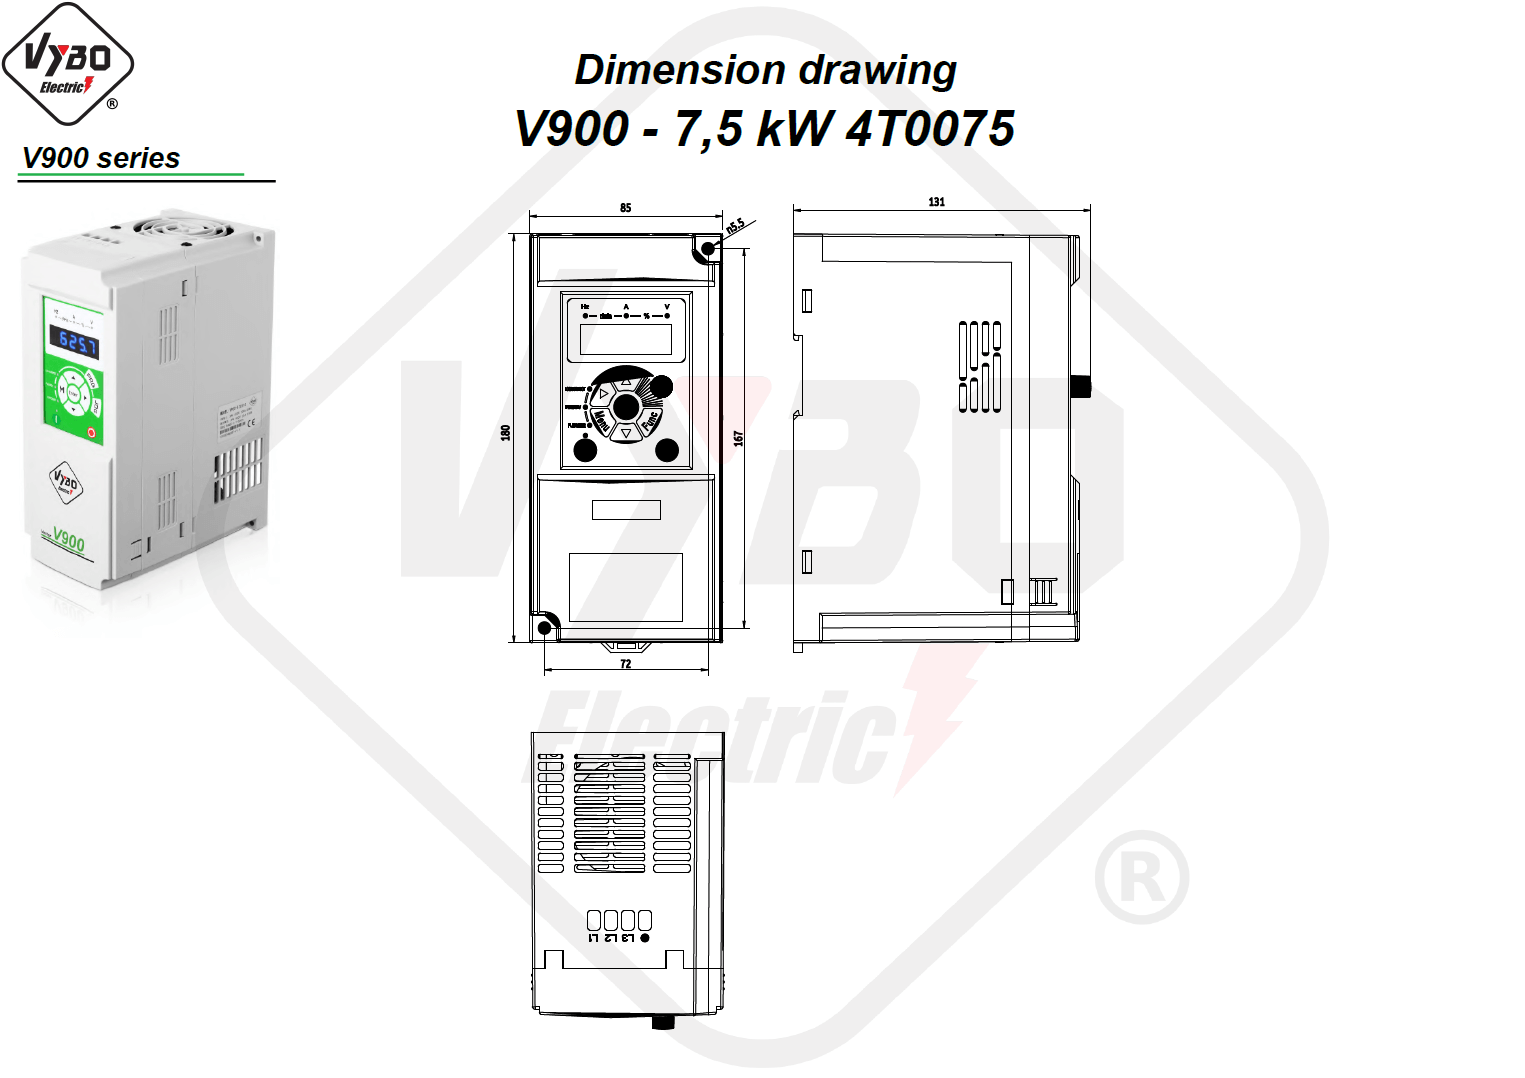 Dimensional drawing V900 4T0075